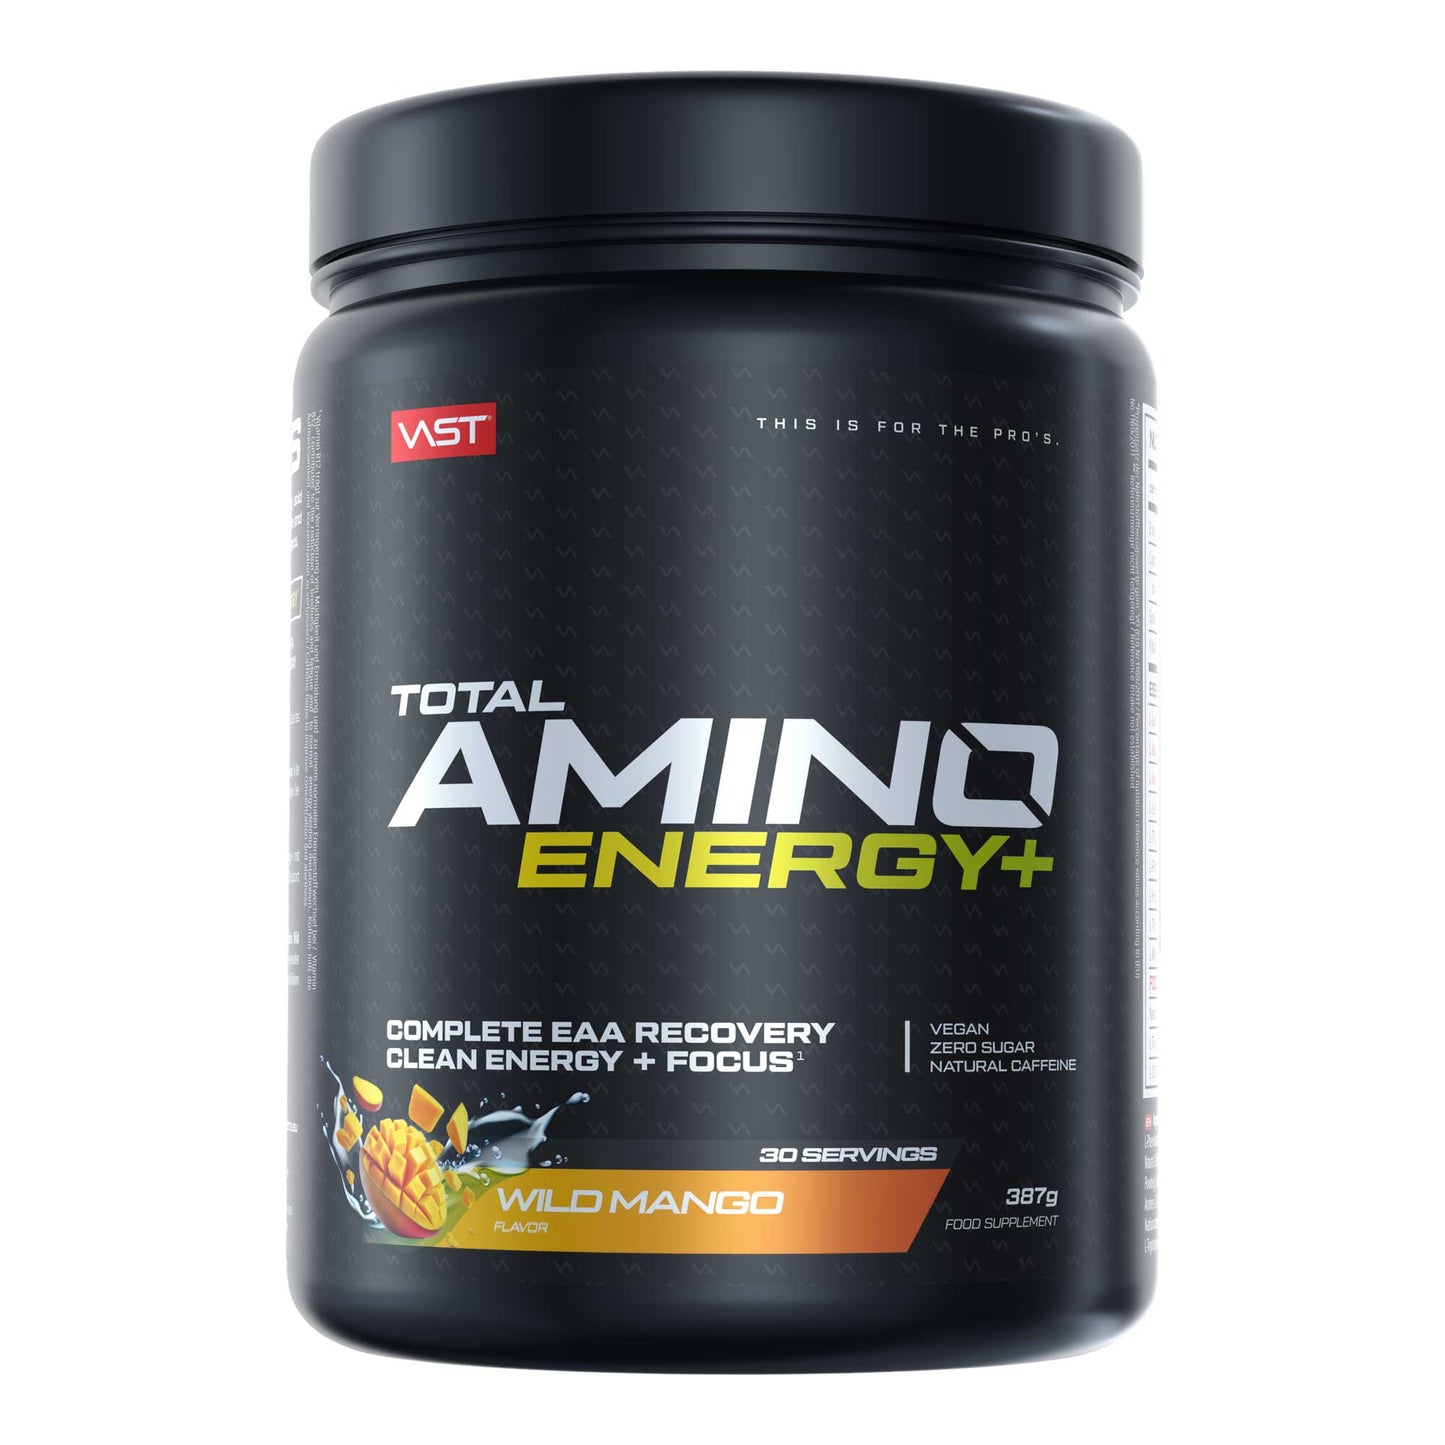 Total Amino ENERGY+